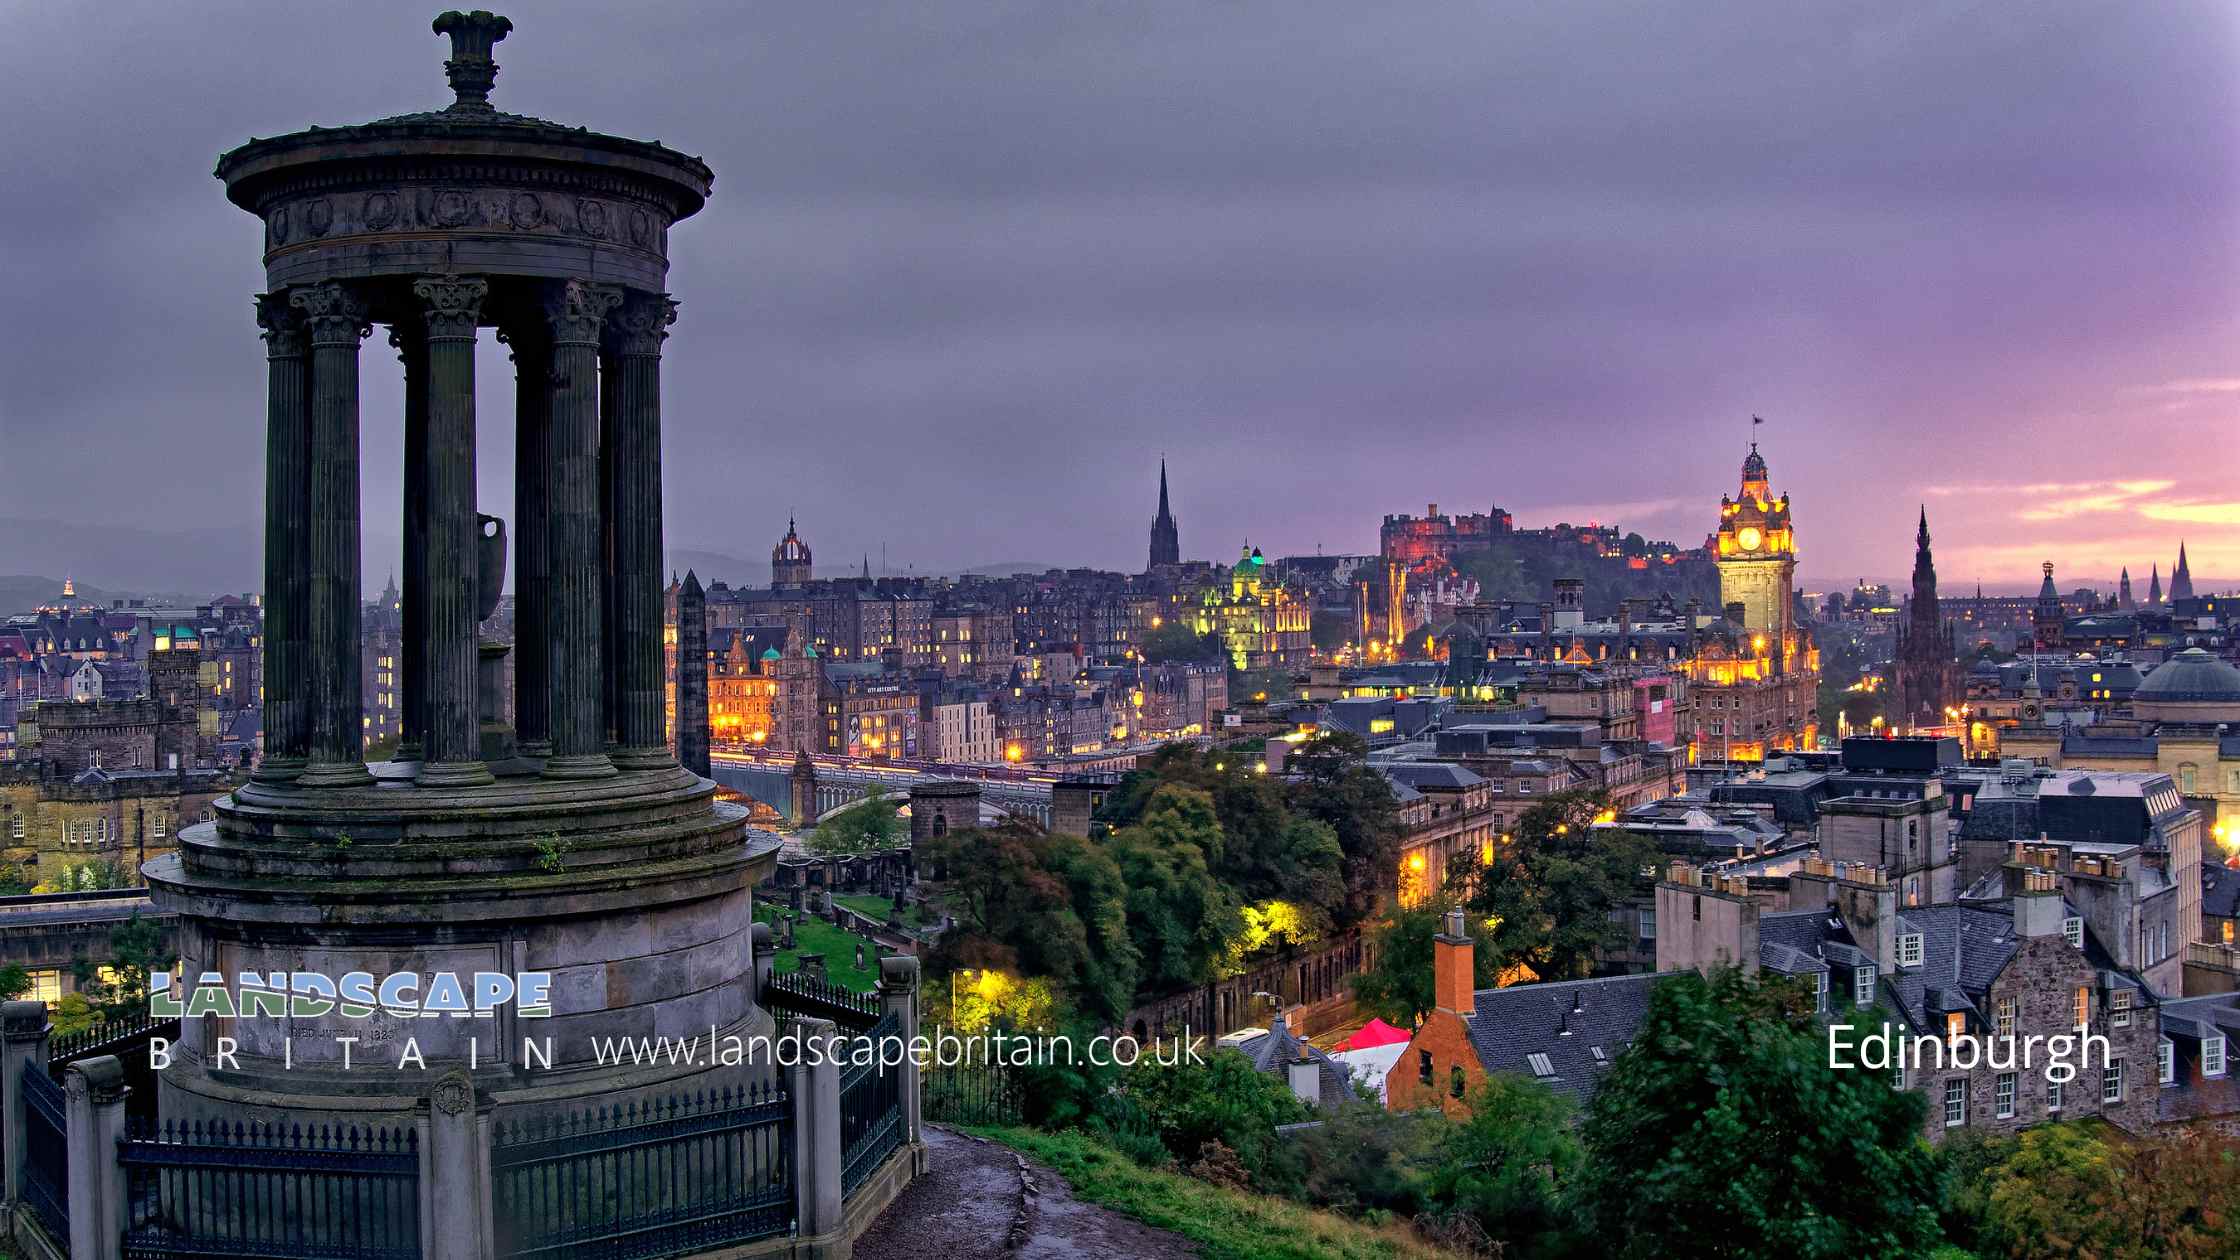 City of Edinburgh by 